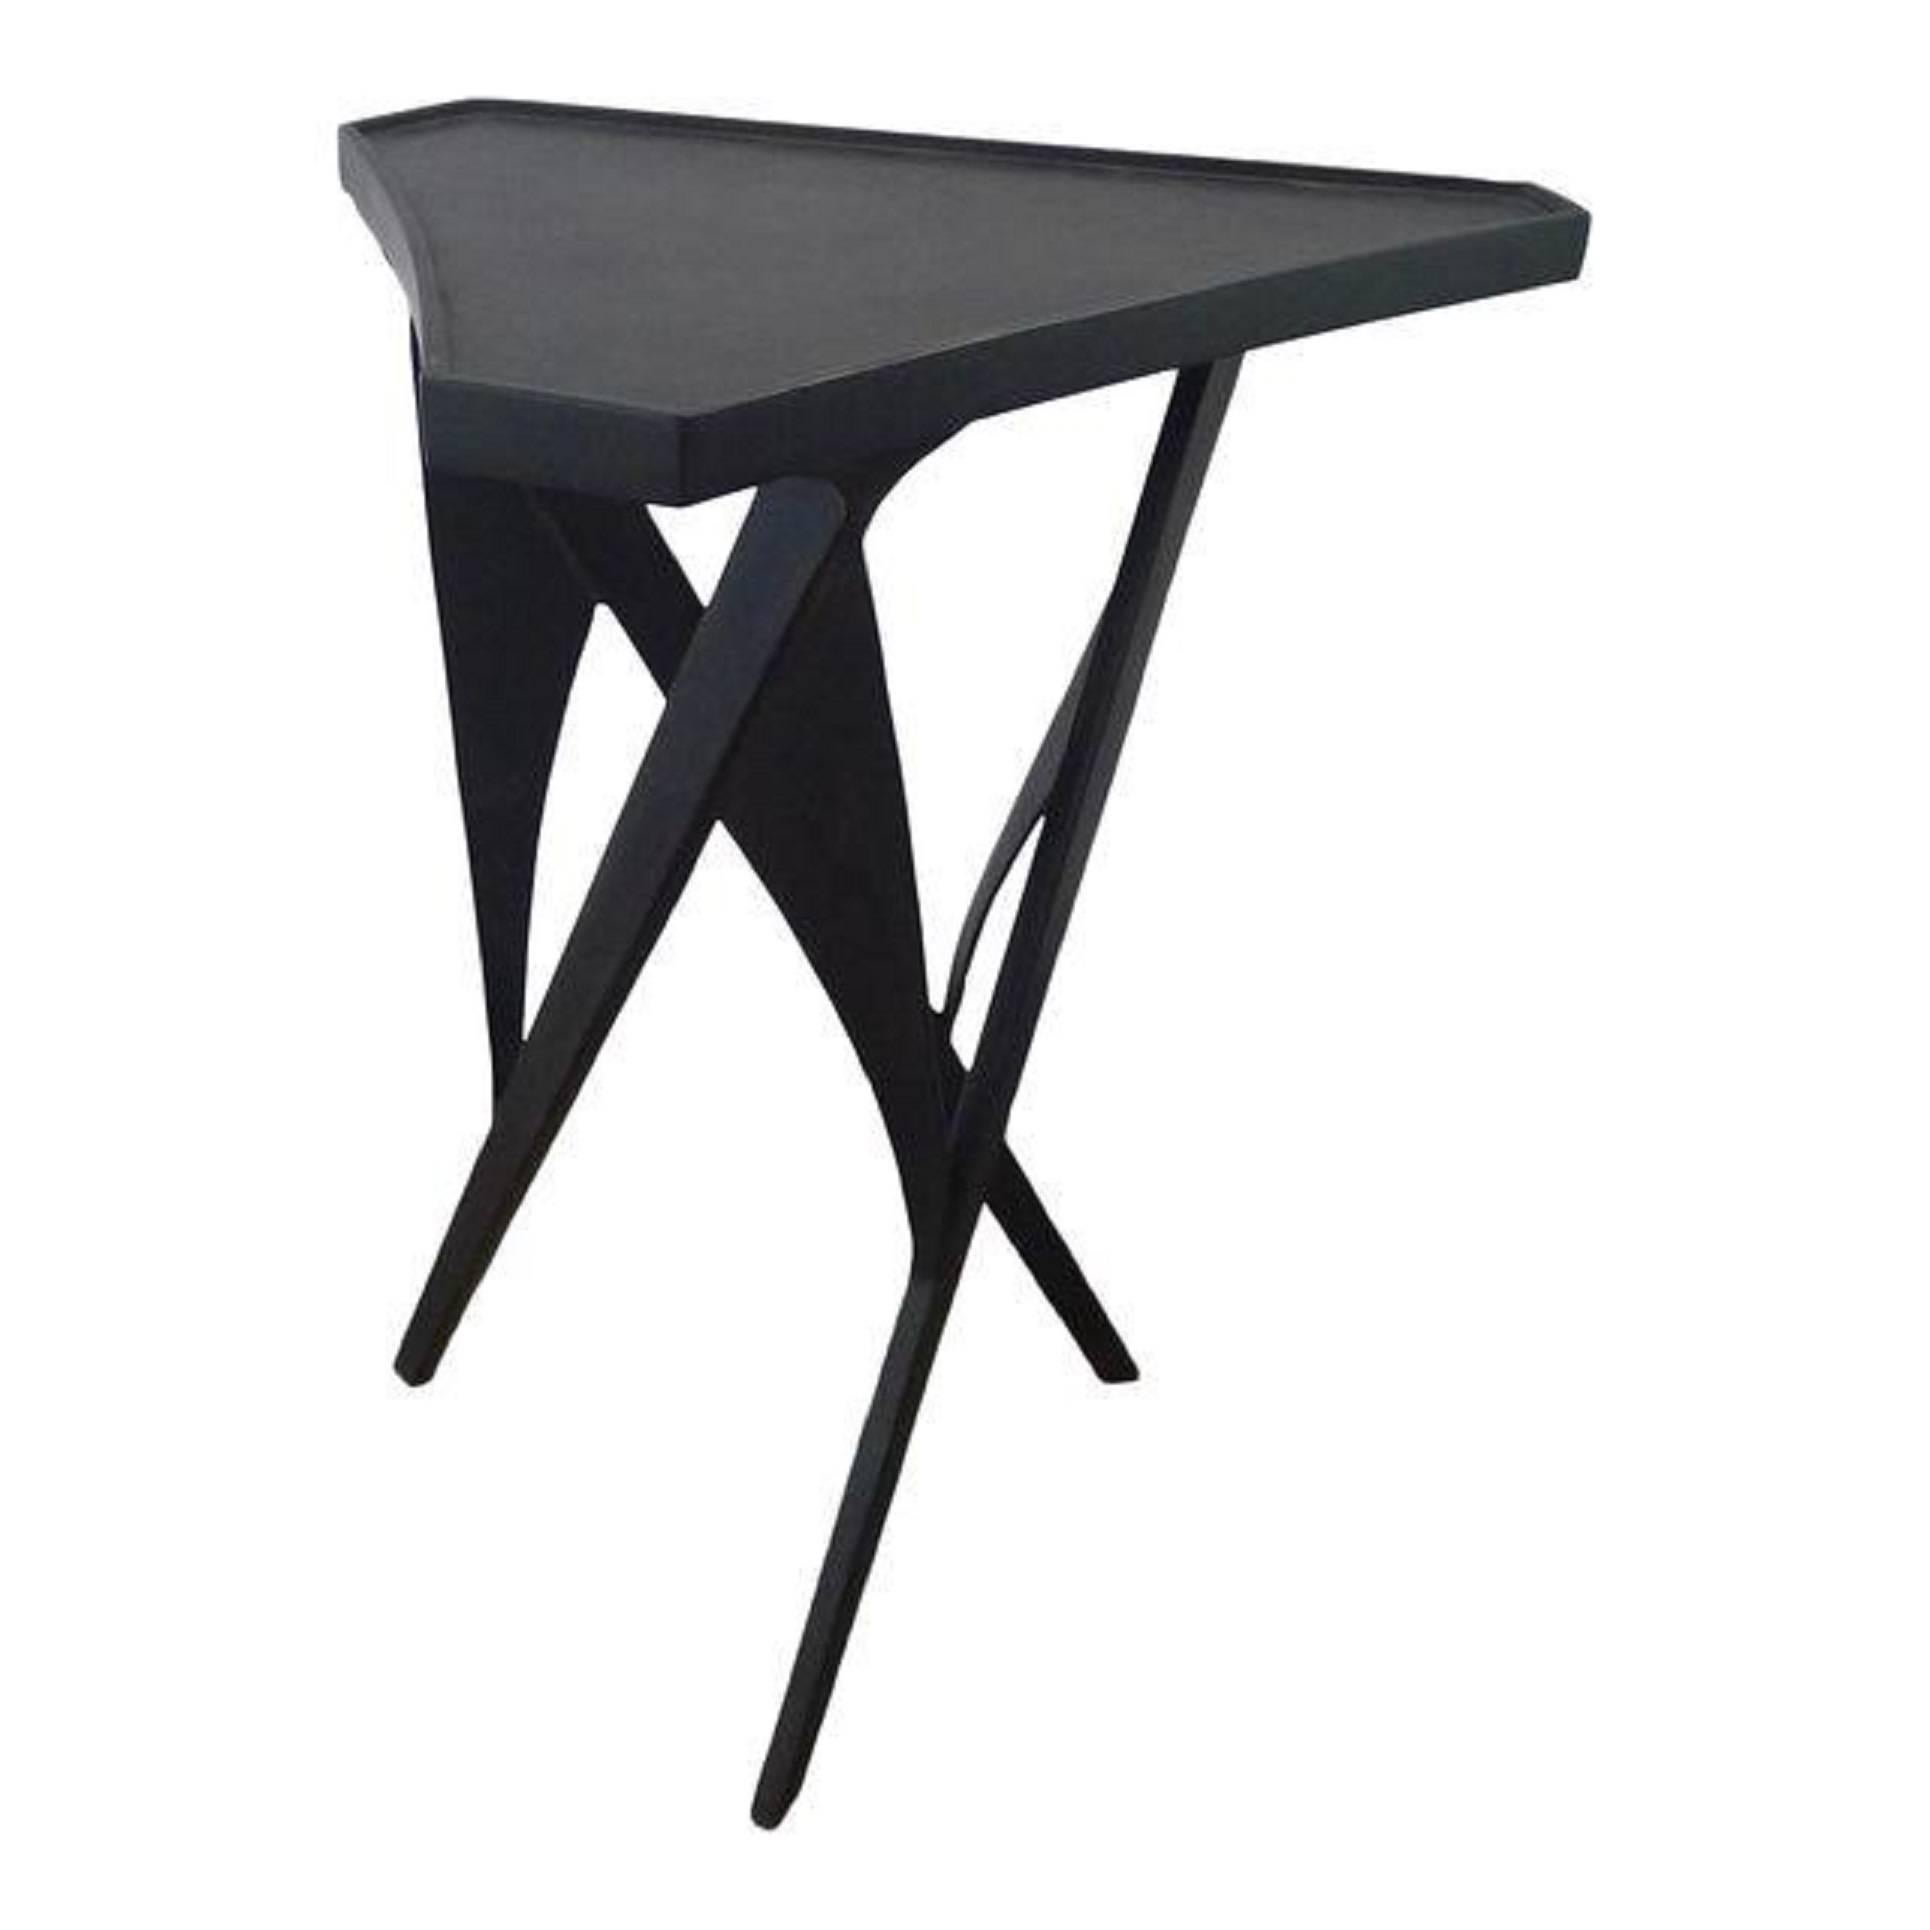 Paul Marra Triangular Steel Side Table For Sale